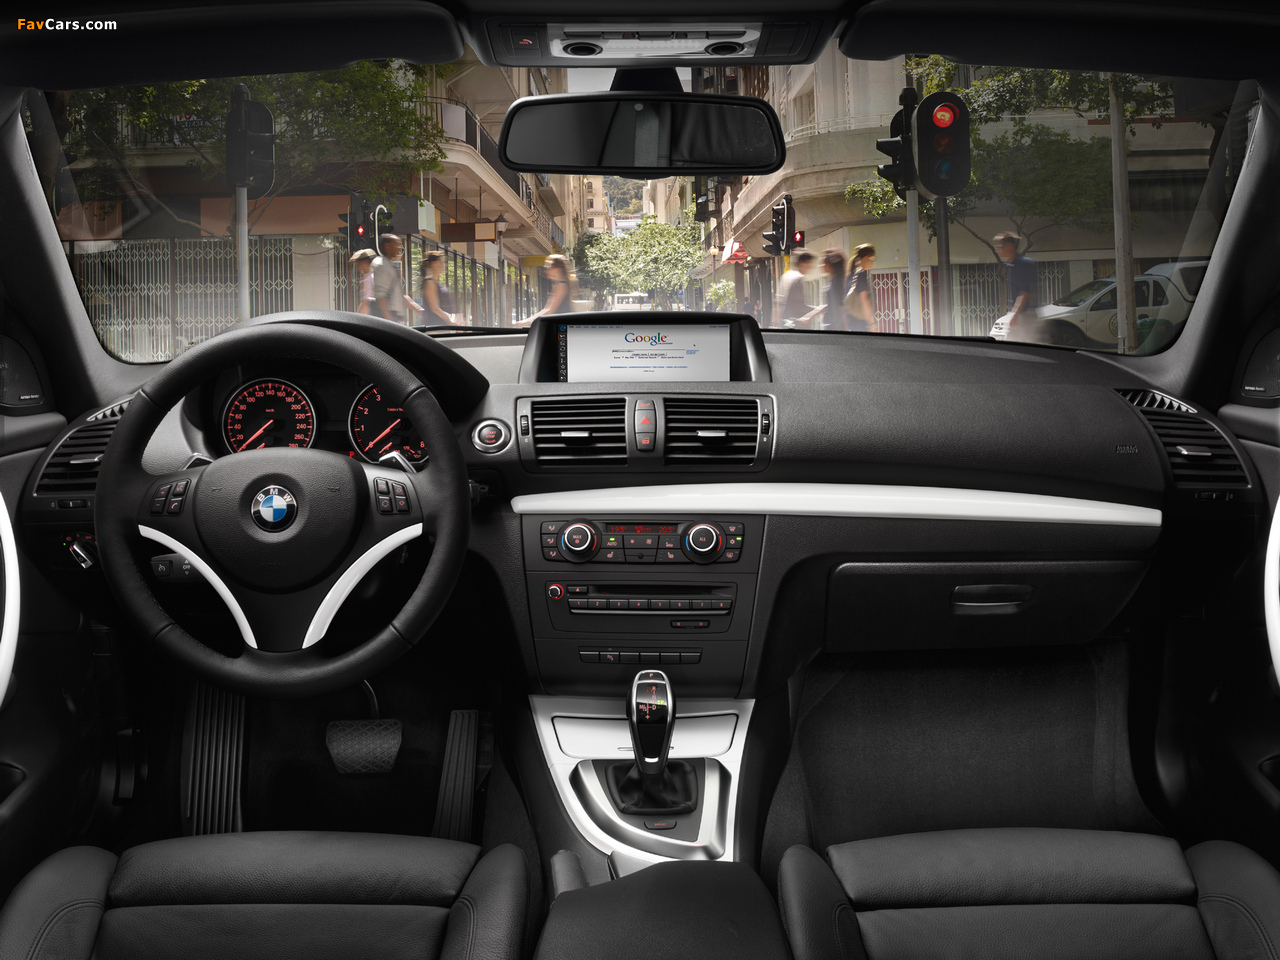 BMW 135i Coupe (E82) 2011 photos (1280 x 960)